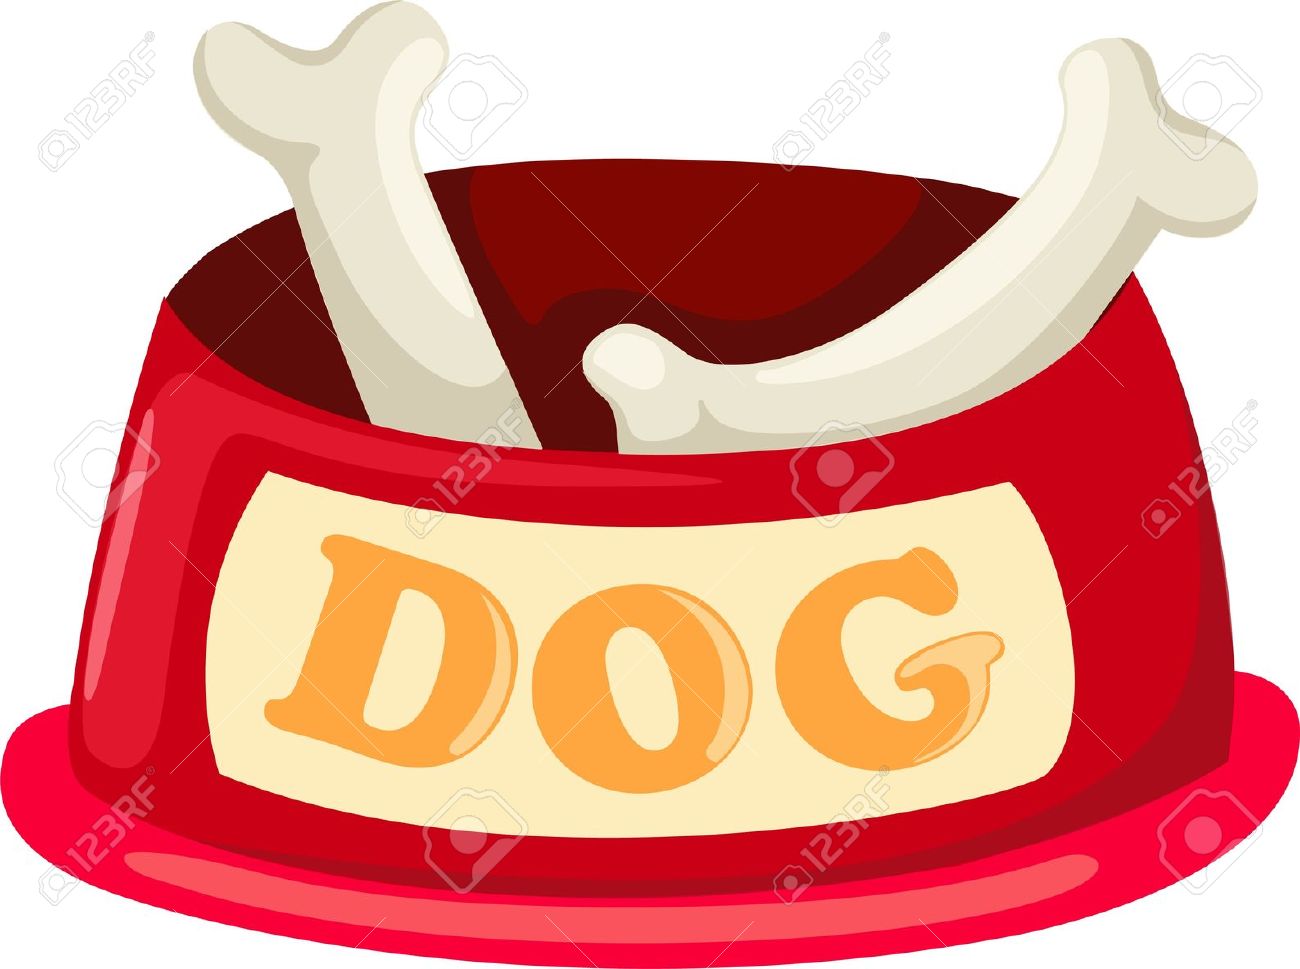 Free Dog Dish Cliparts, Download Free Clip Art, Free Clip ...